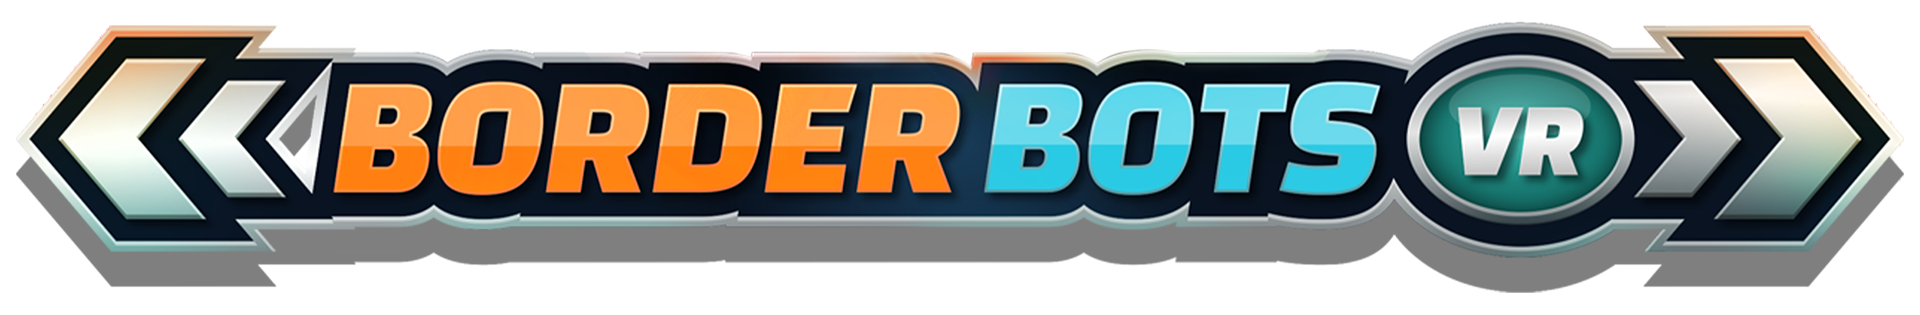 Border Bots logo